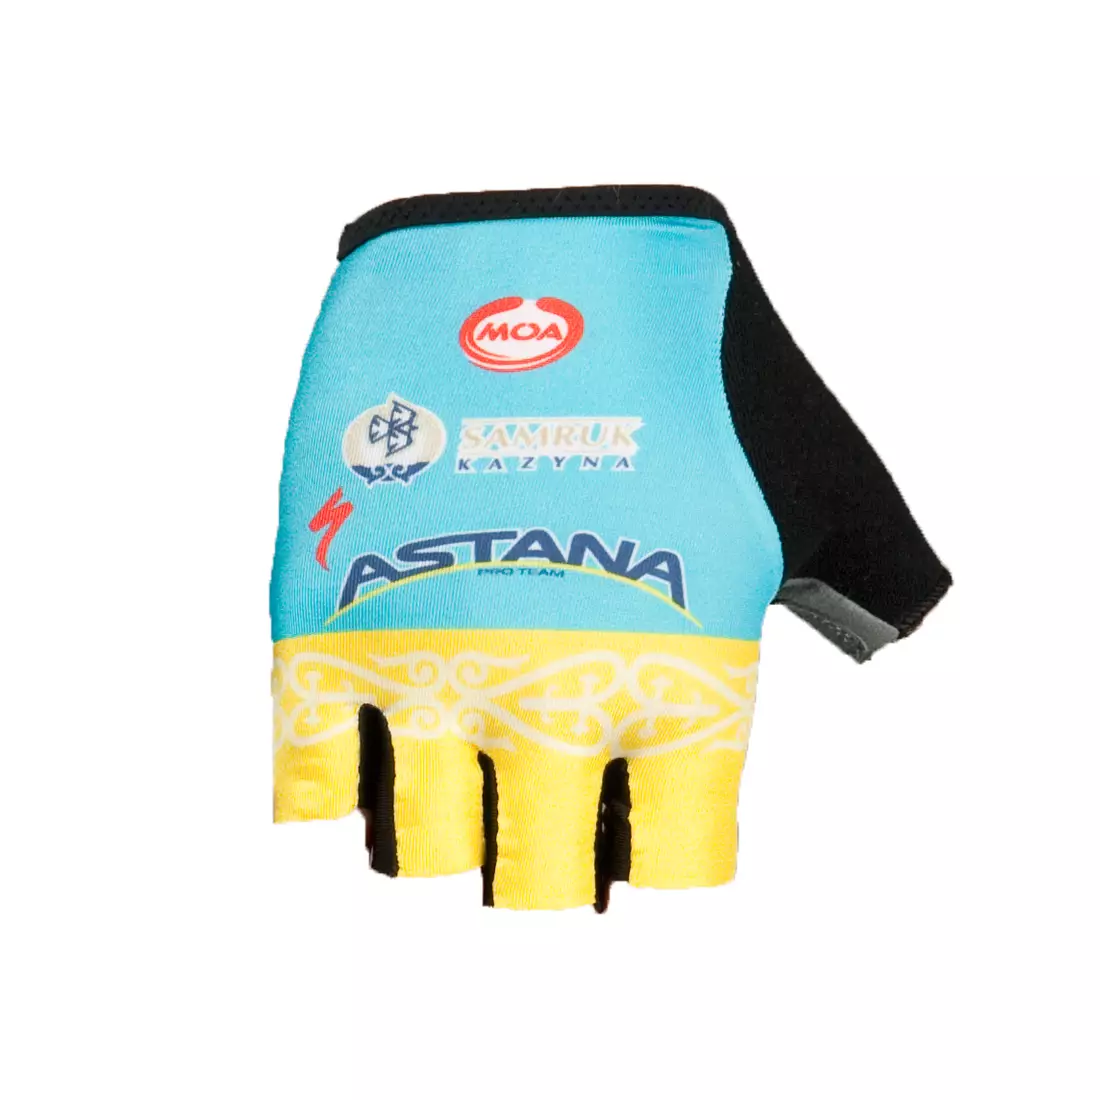 ASTANA 2015 cycling gloves